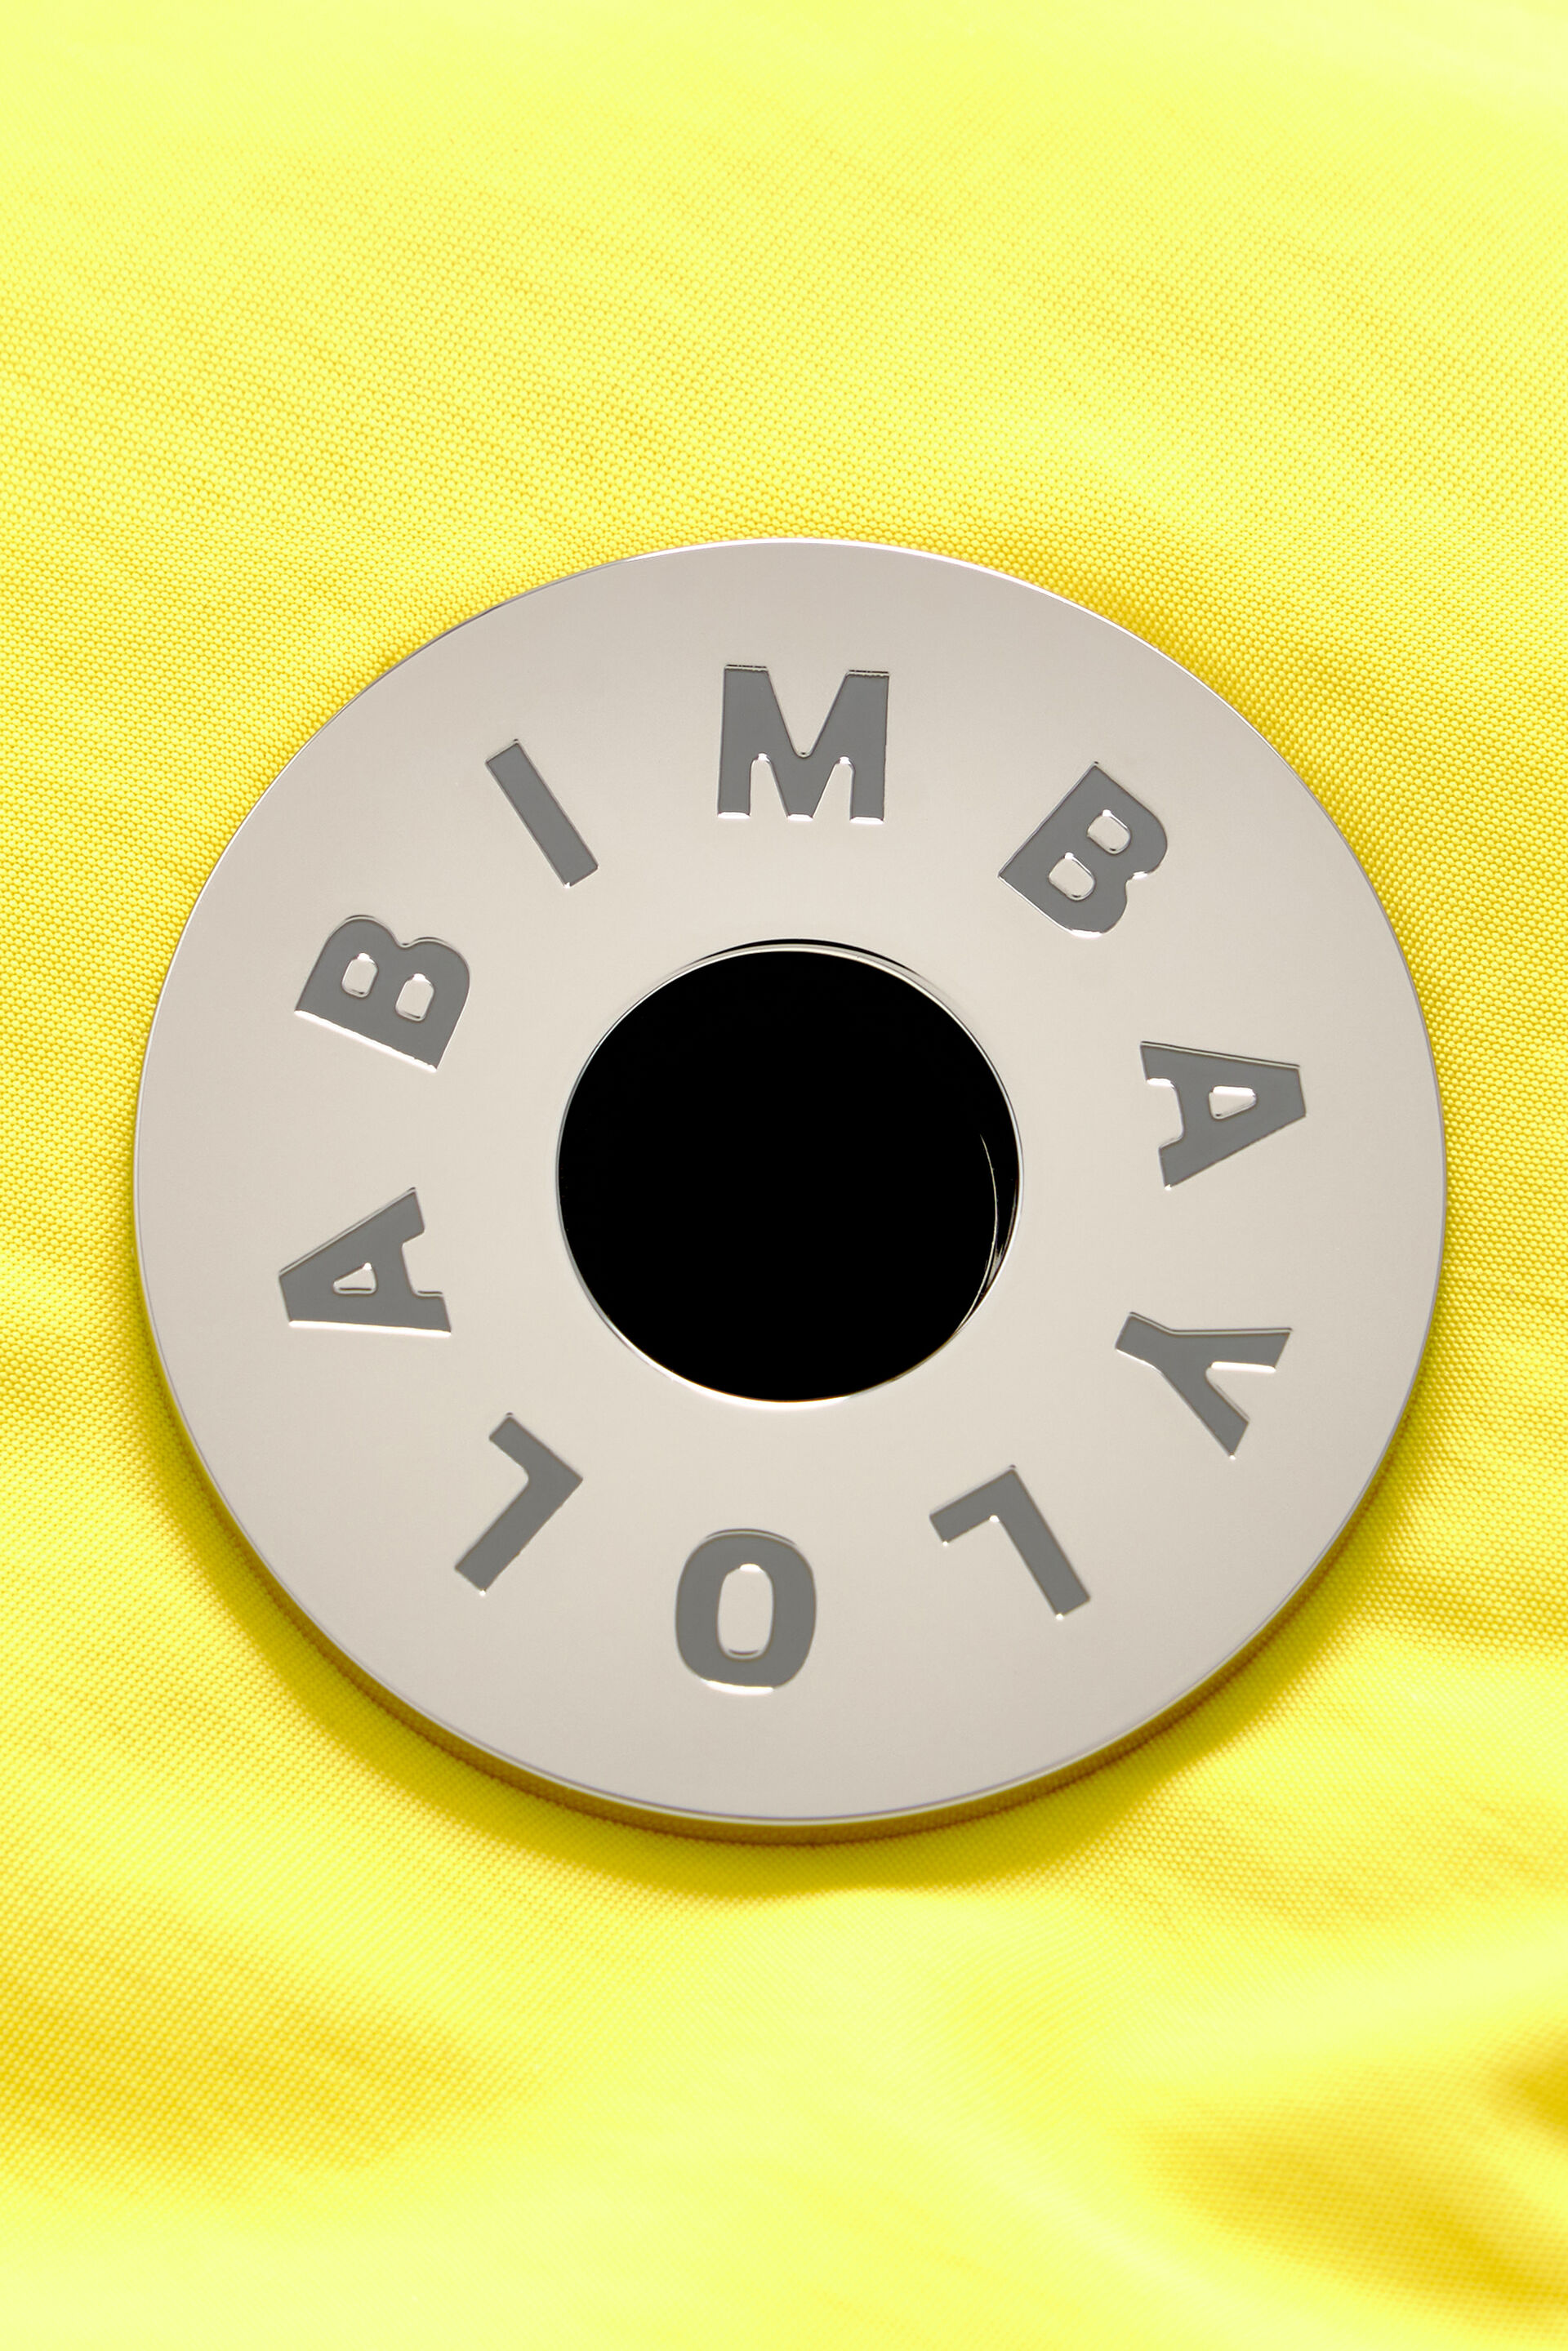 Crossbody bag Bimba y Lola Yellow in Polyamide - 33050249